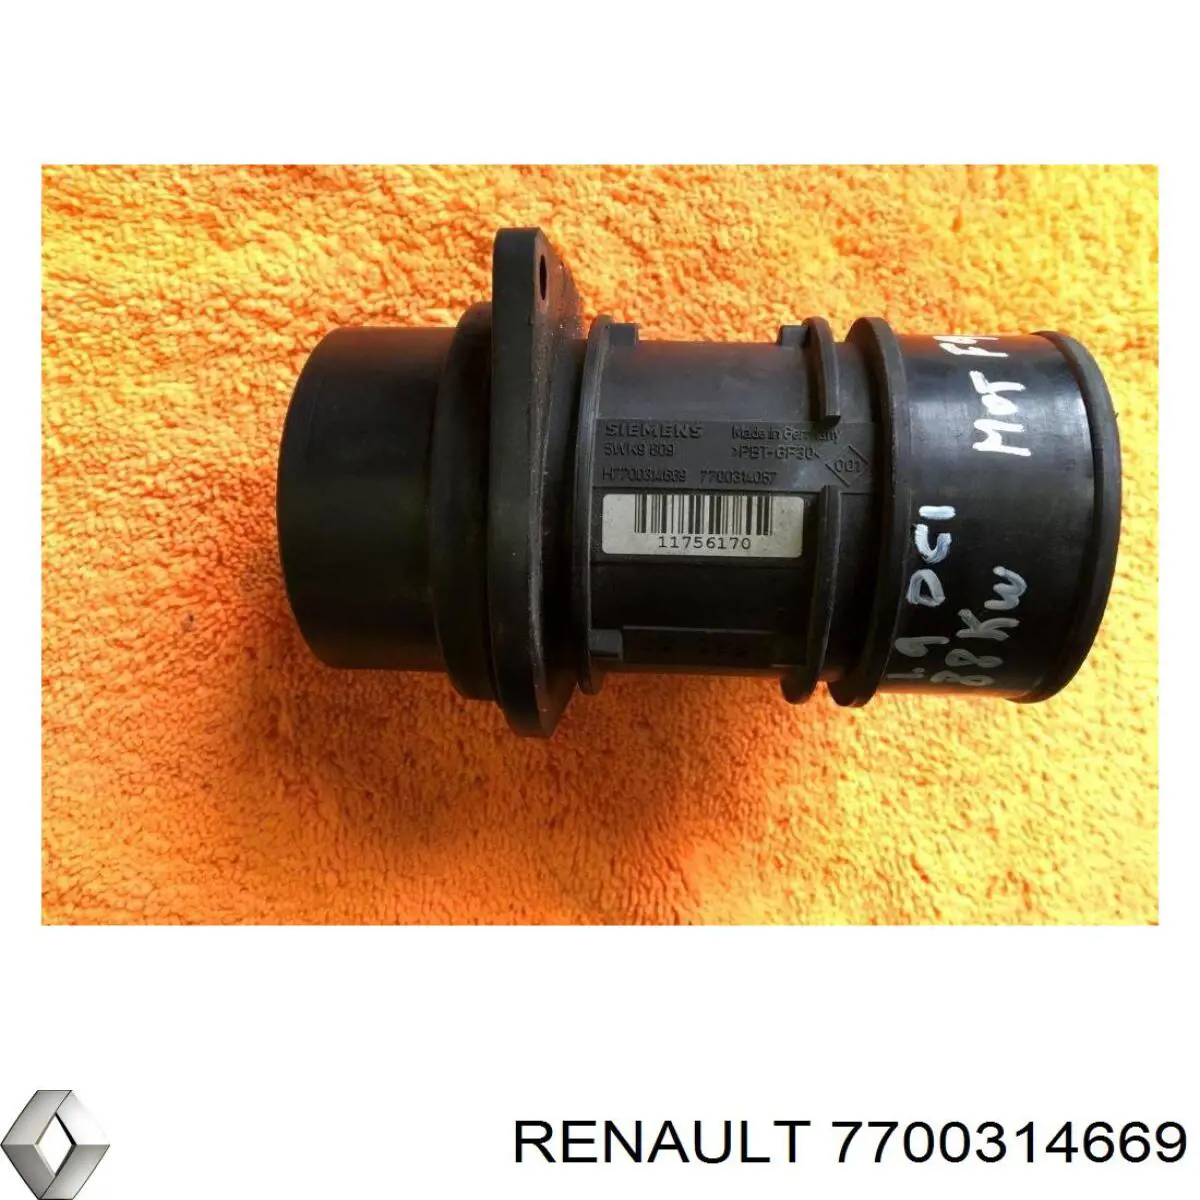 7700314669 Renault (RVI) sensor de fluxo (consumo de ar, medidor de consumo M.A.F. - (Mass Airflow))